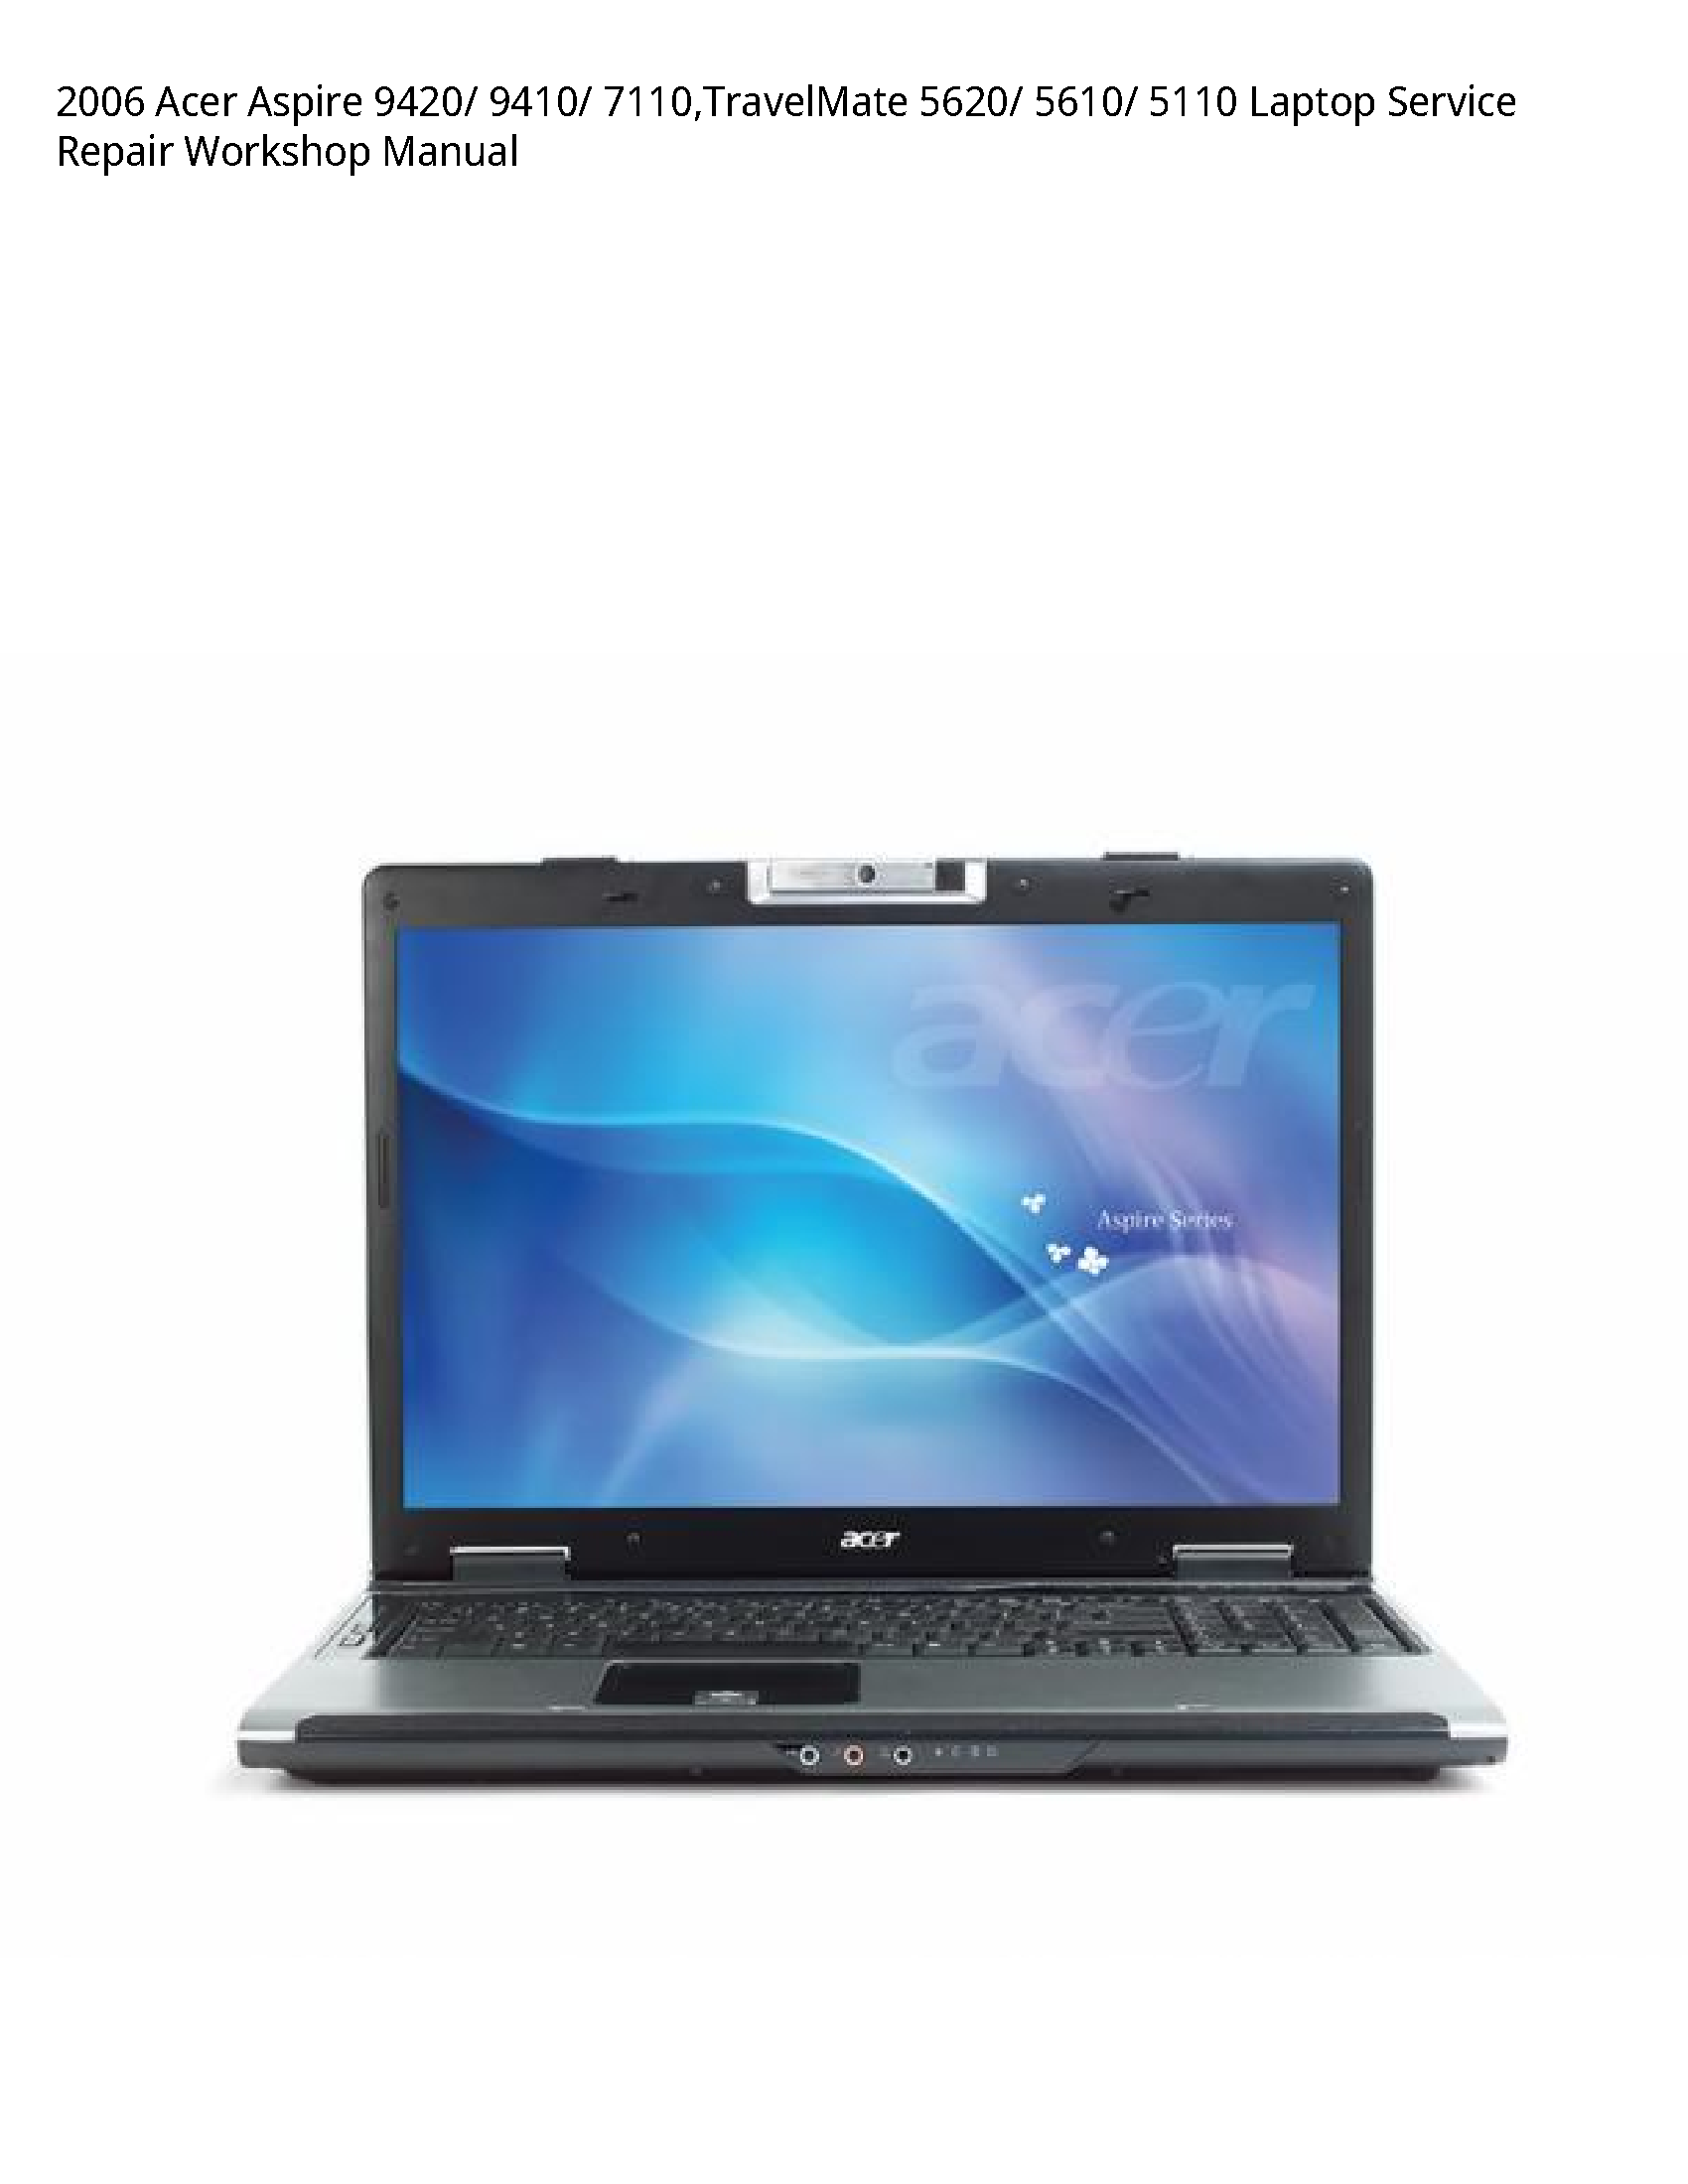 Acer 9420 Aspire Laptop manual